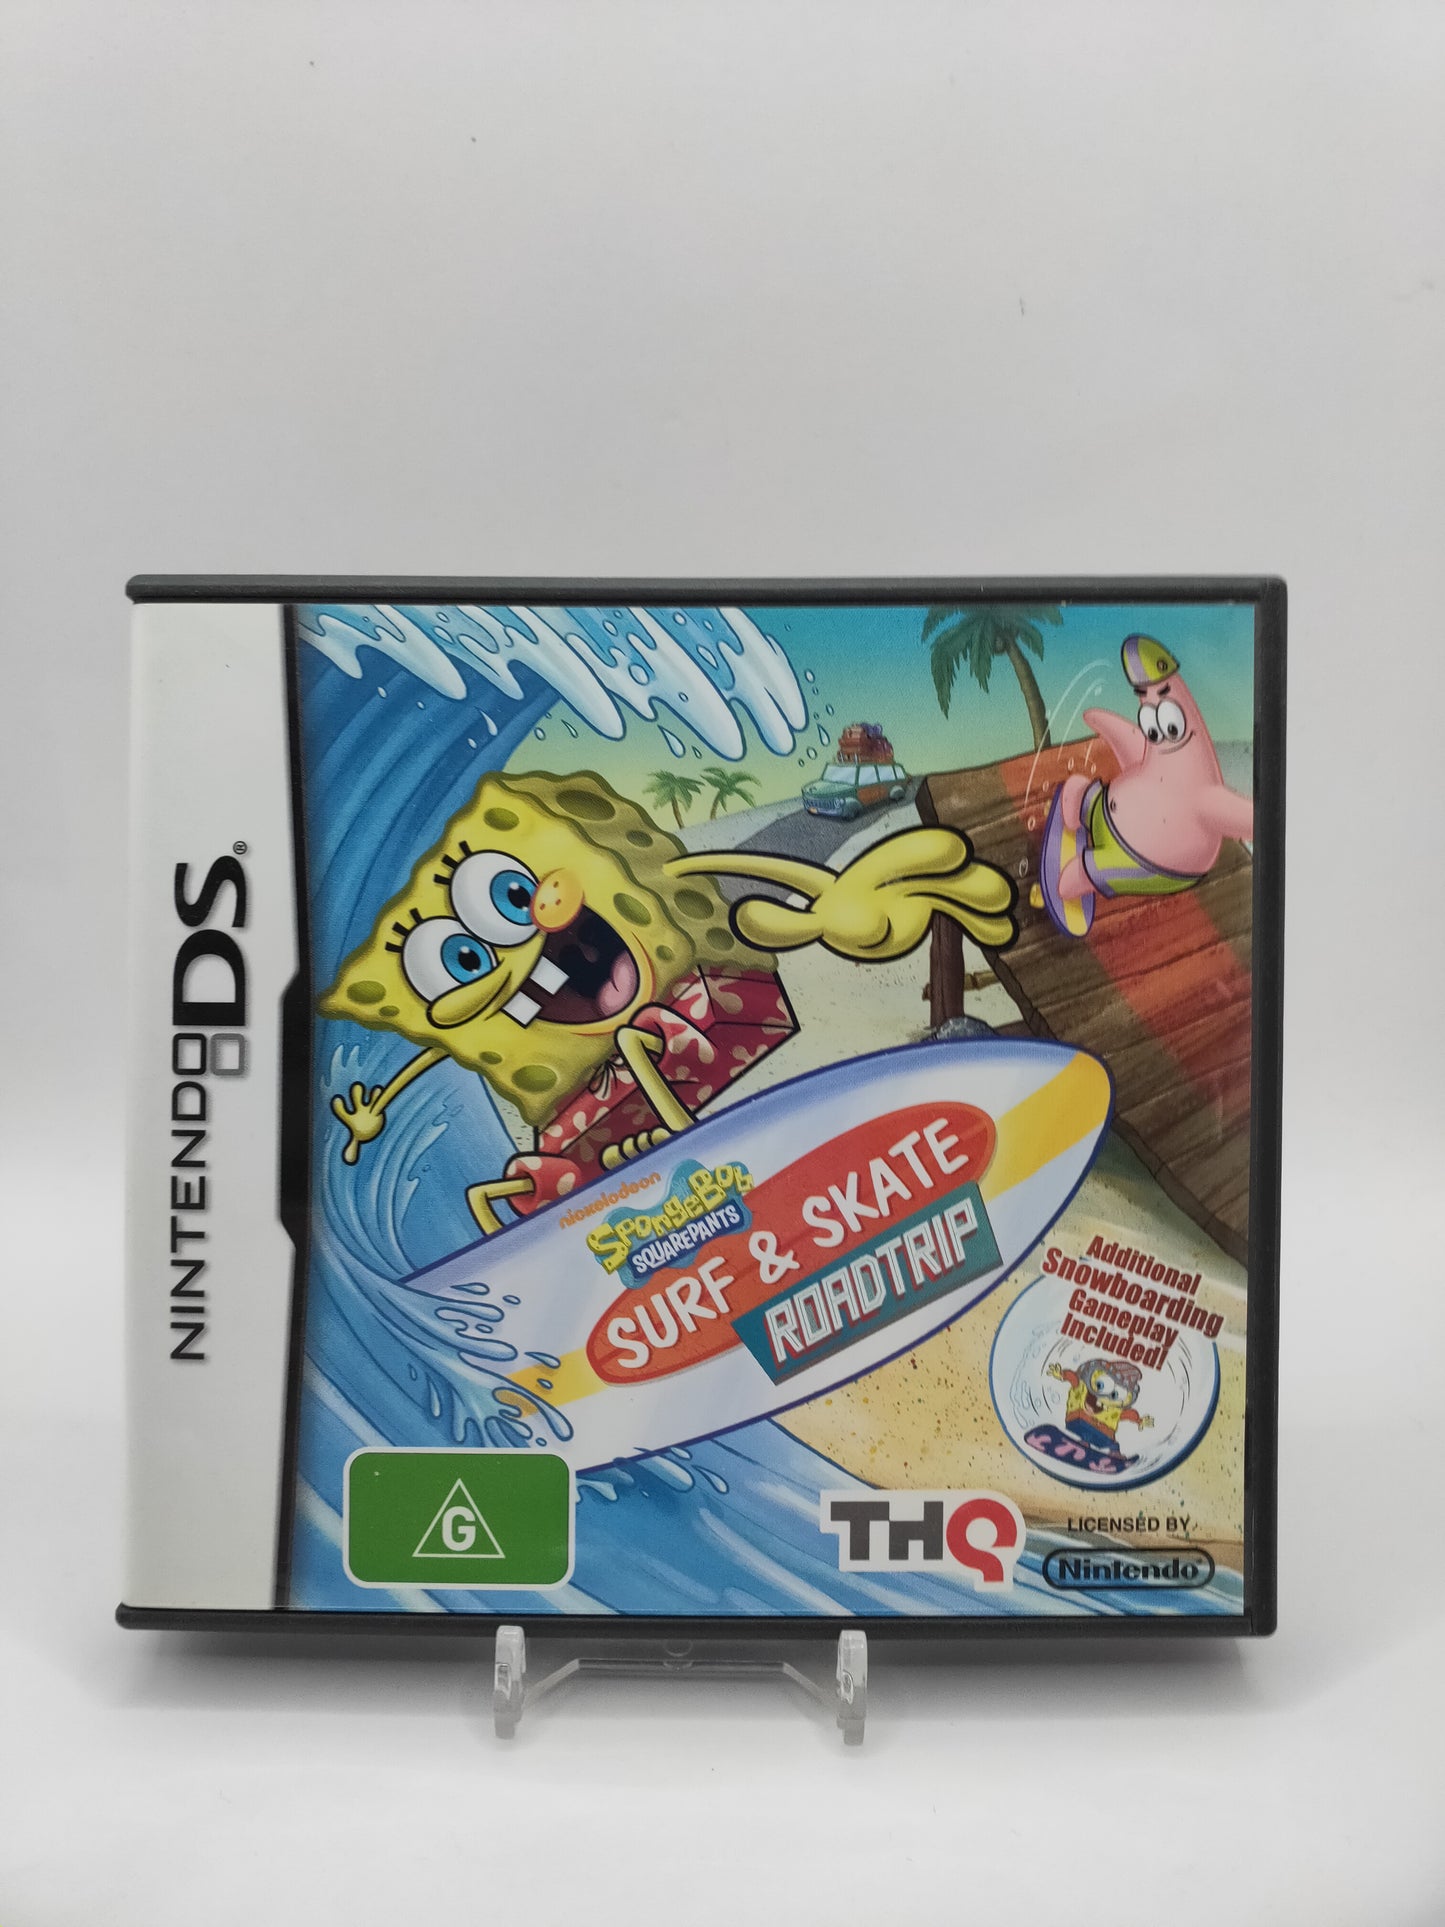 Sponge Bob Square Pants Surf & Skate Roadtrip Nintendo DS